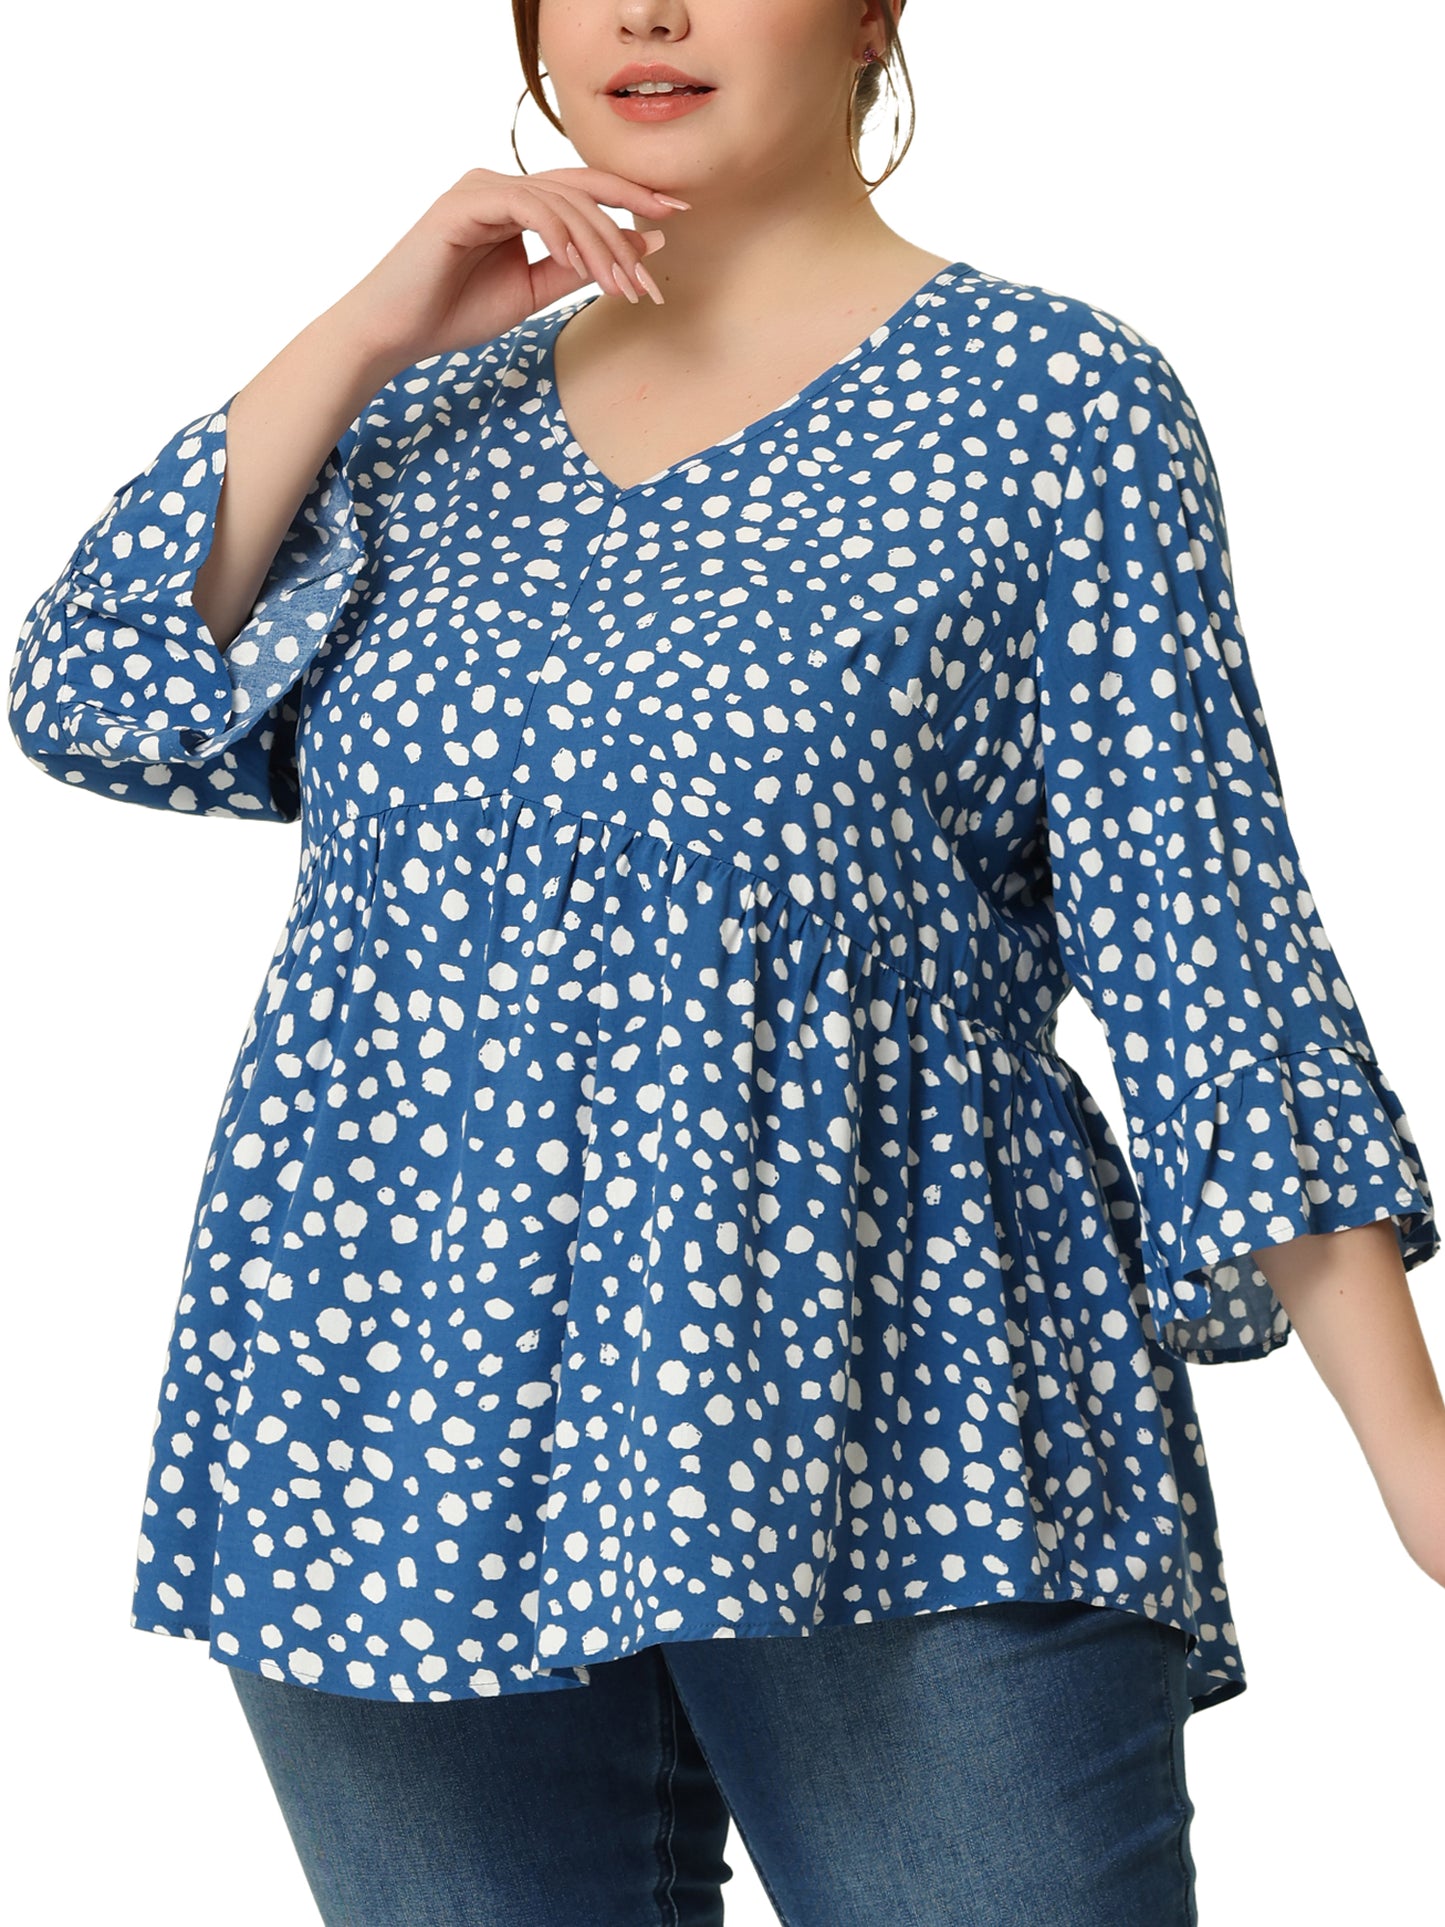 Agnes Orinda Plus Size Polka Dots Blouses V Neck 3/4 Ruffle Sleeve Peplum Tops Blue